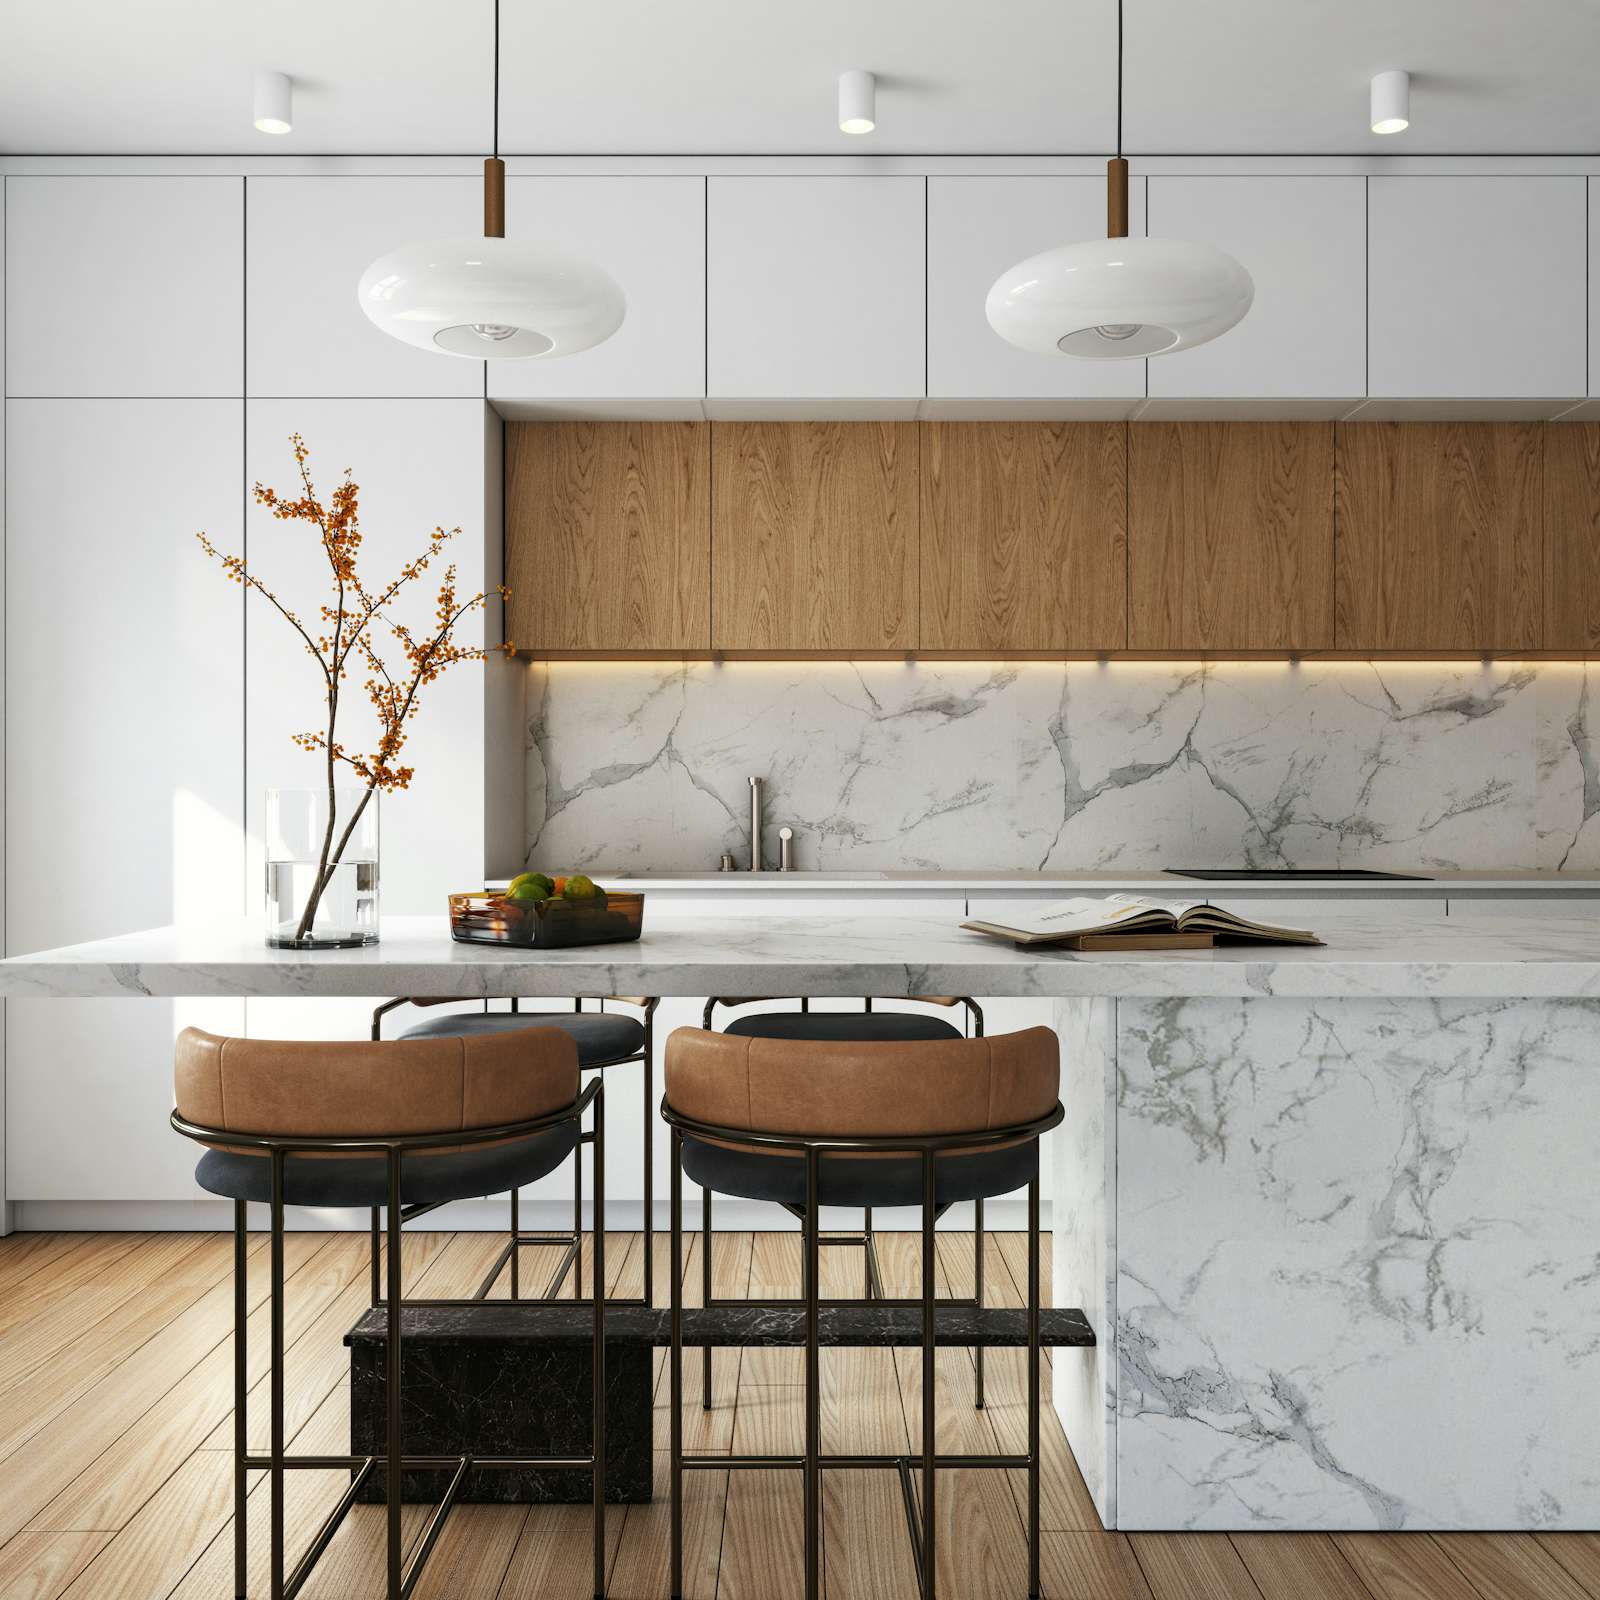 Modern elegant kitchen